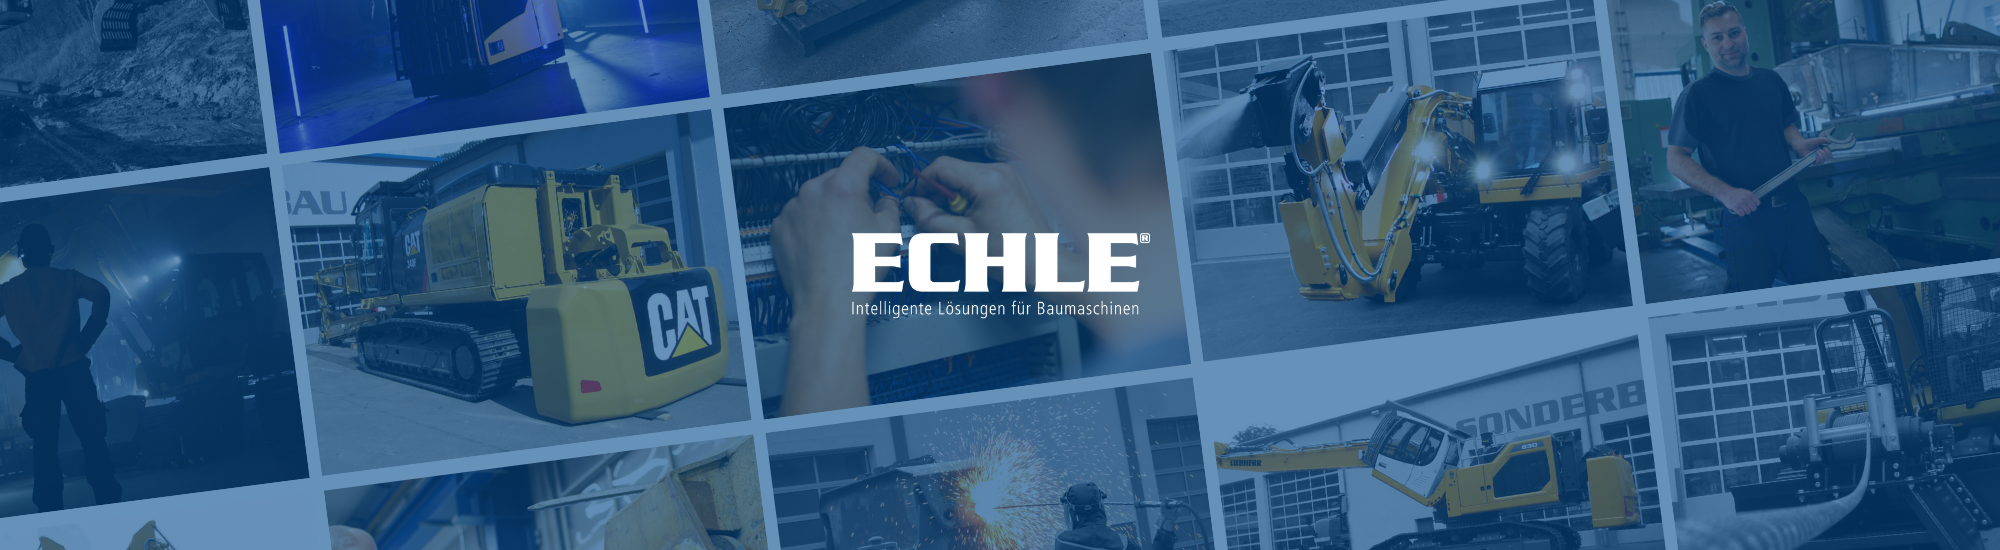 ECHLE Hartstahl GmbH